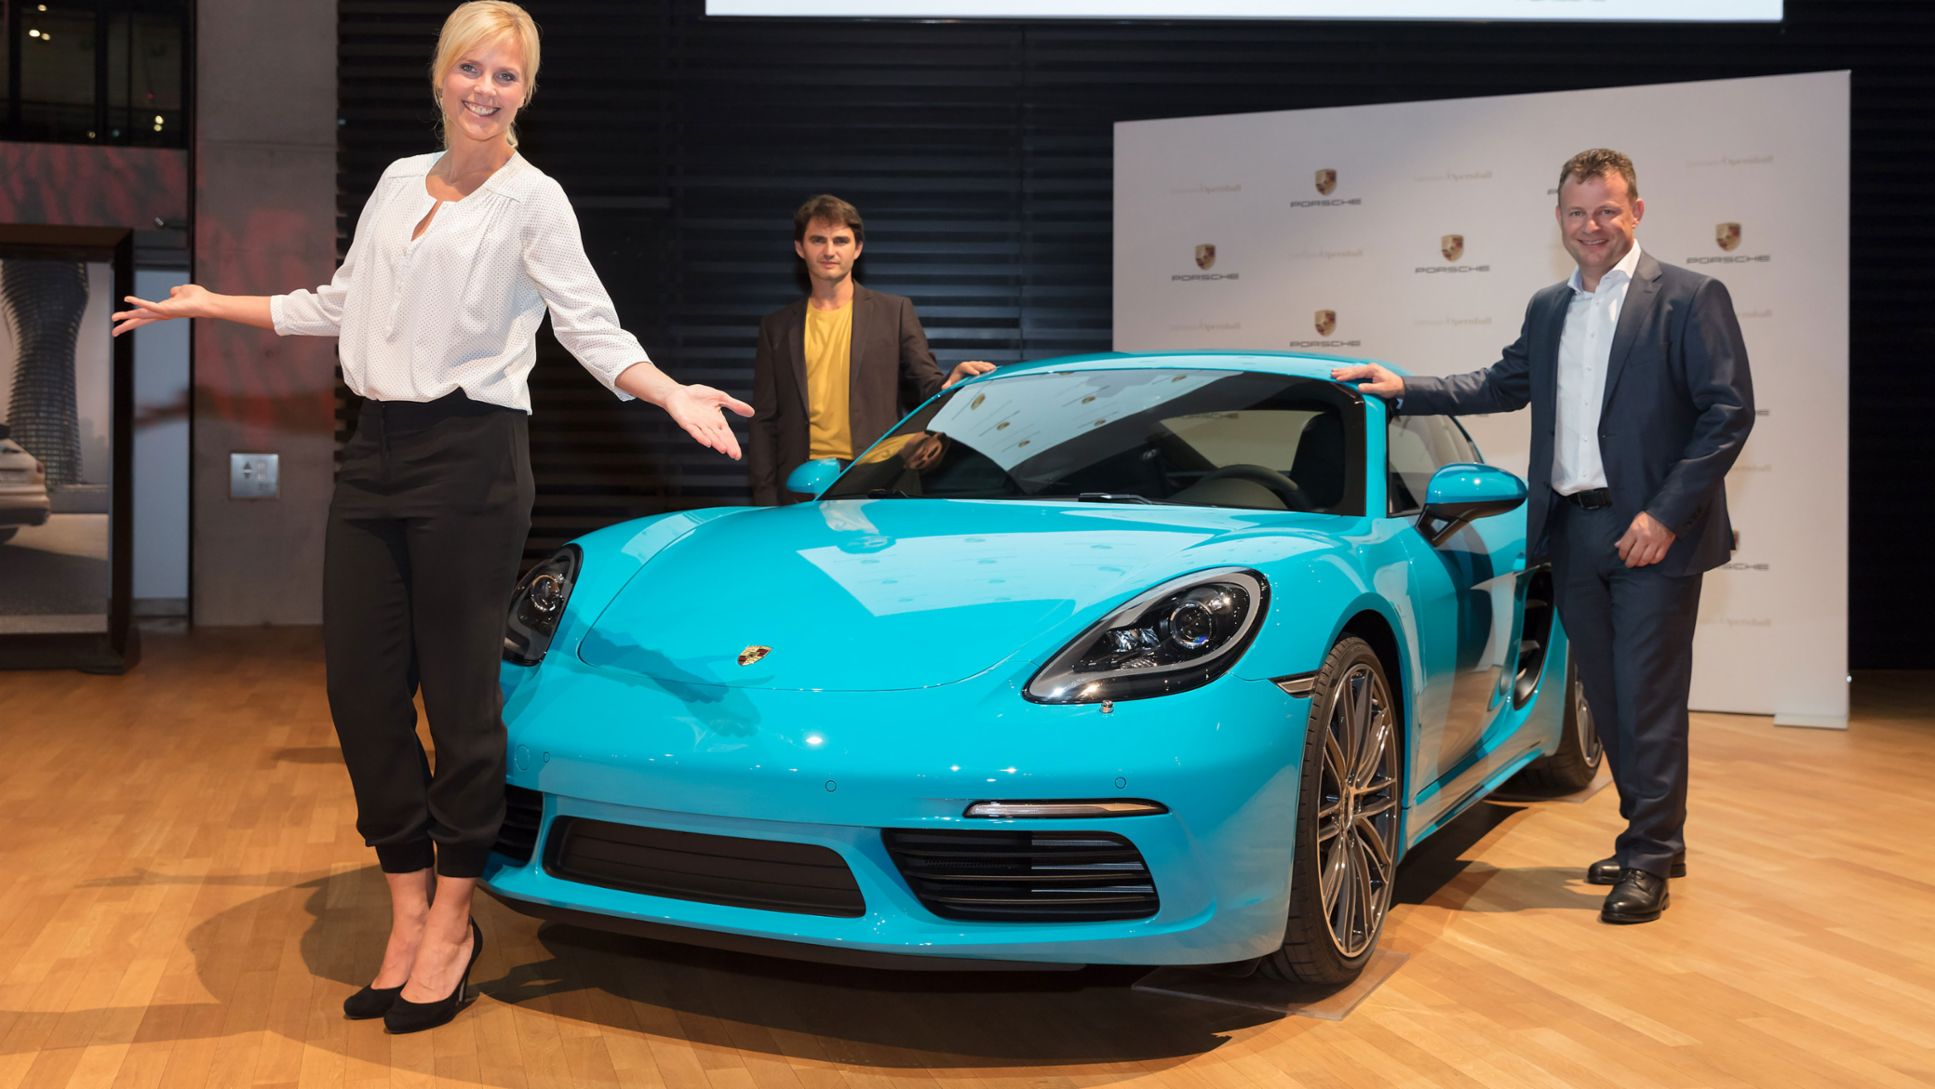 Melanie Marschke, Actress, Lenn Kudrjawizki, Actor, Gerd Rupp, Chair of the Executive Board at Porsche Leipzig, l-r, 718 Cayman, 2017, Porsche AG